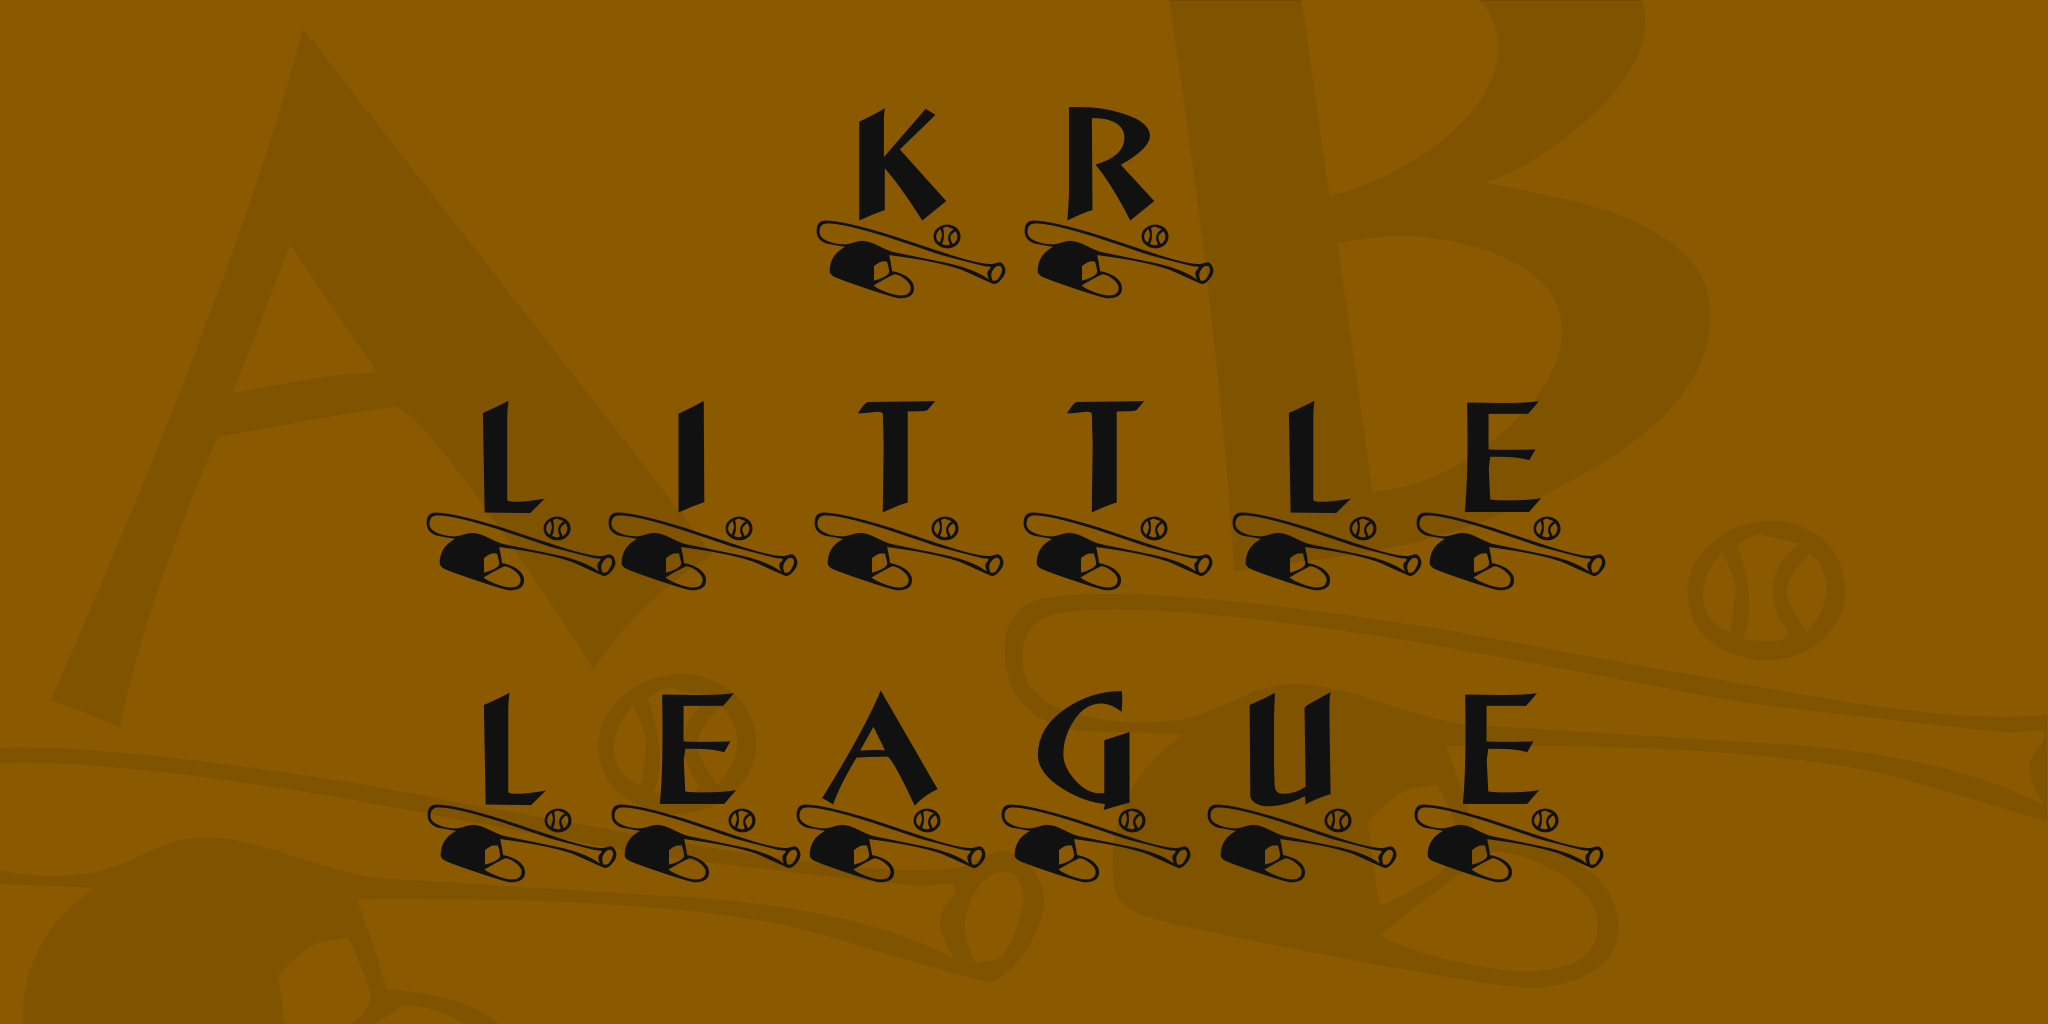 Kr Little League